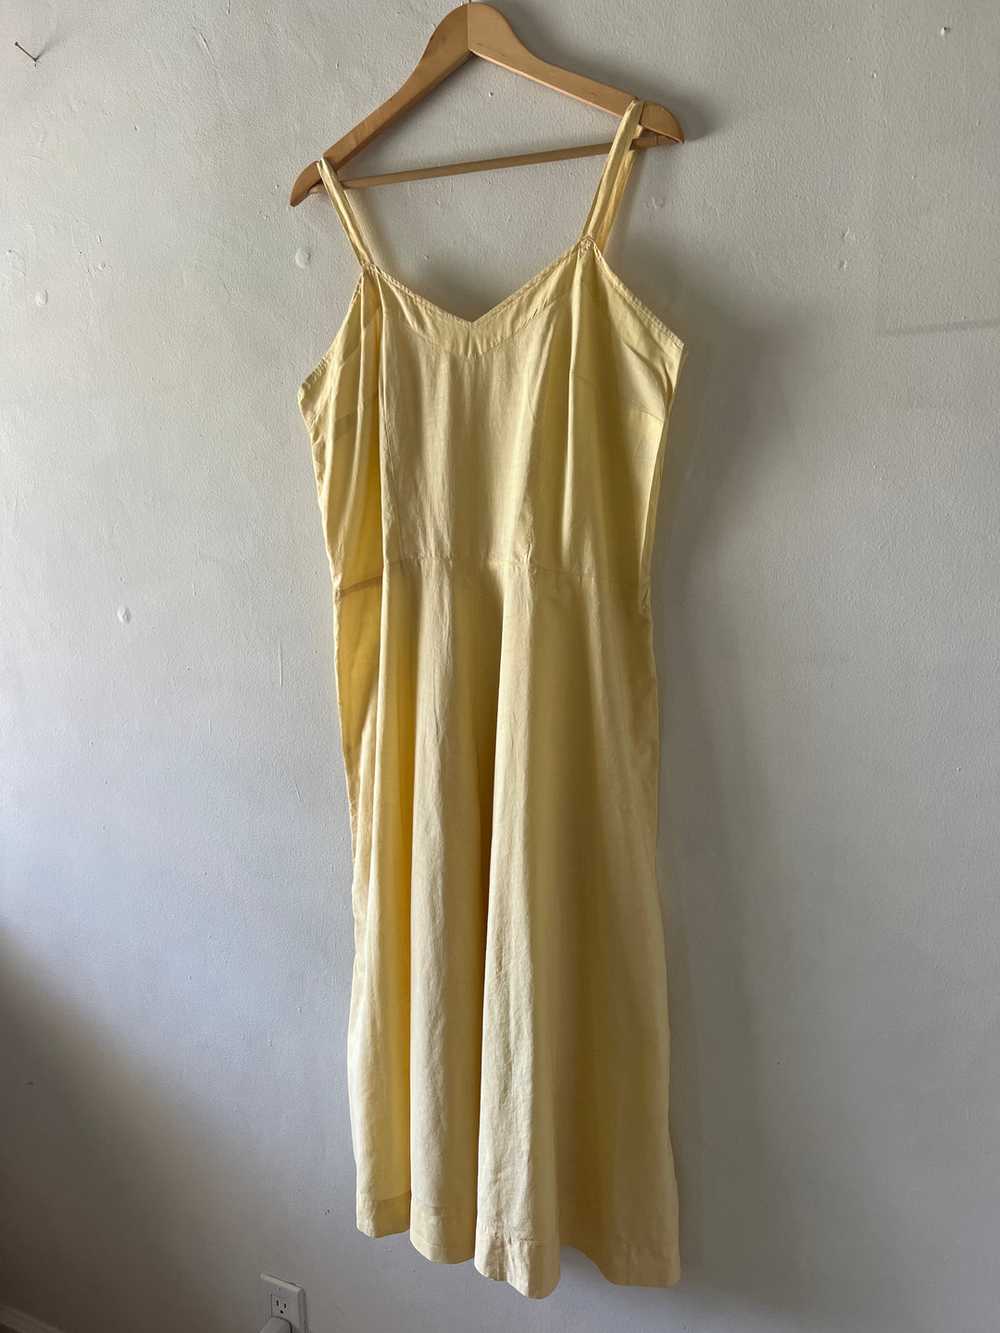 Vintage Cotton Yellow Dress (L) - image 4